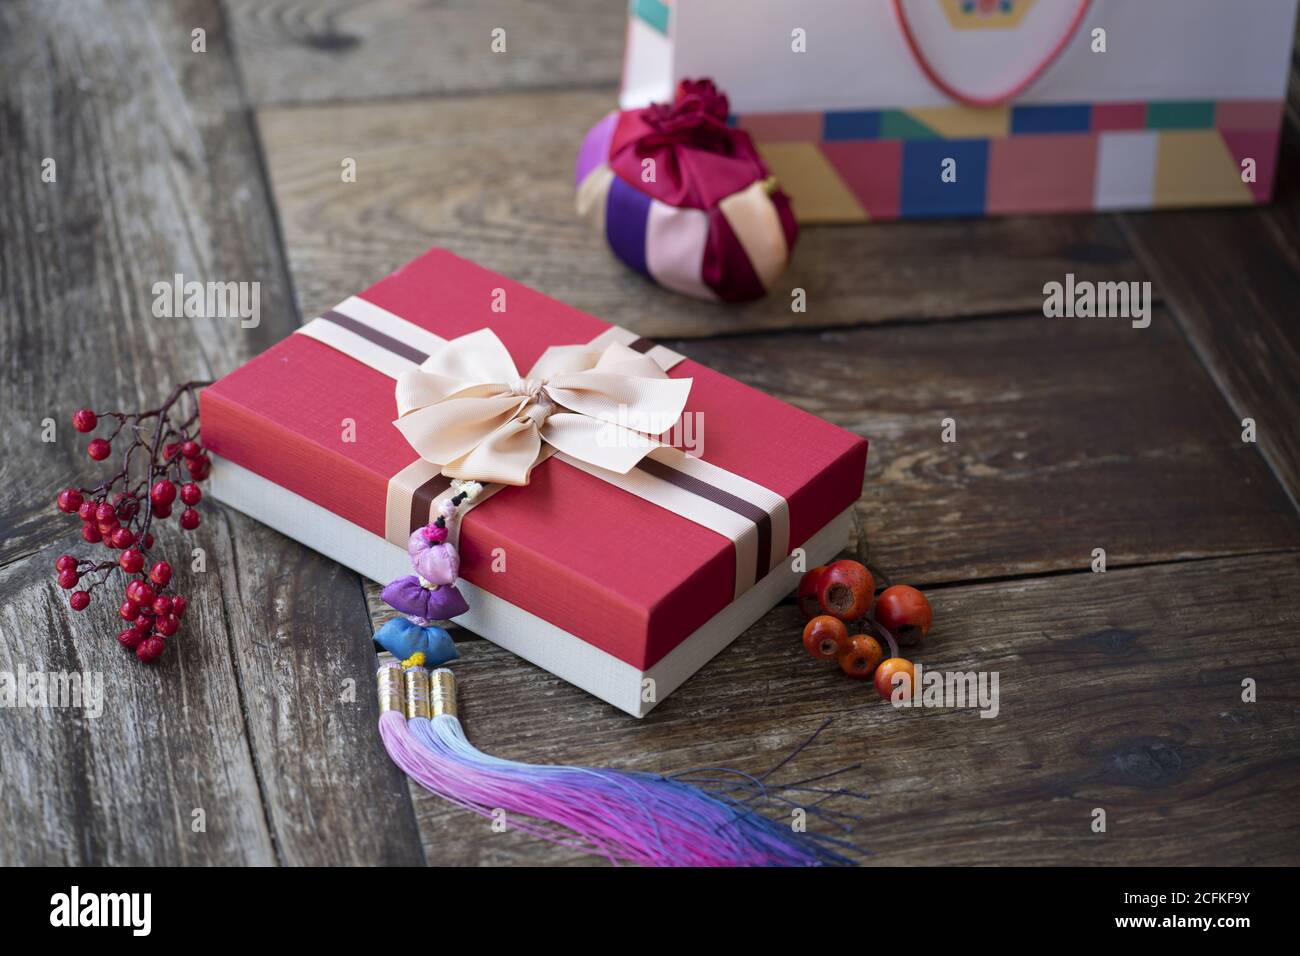 Happy new year's image of Korea, gift box Stock Photo